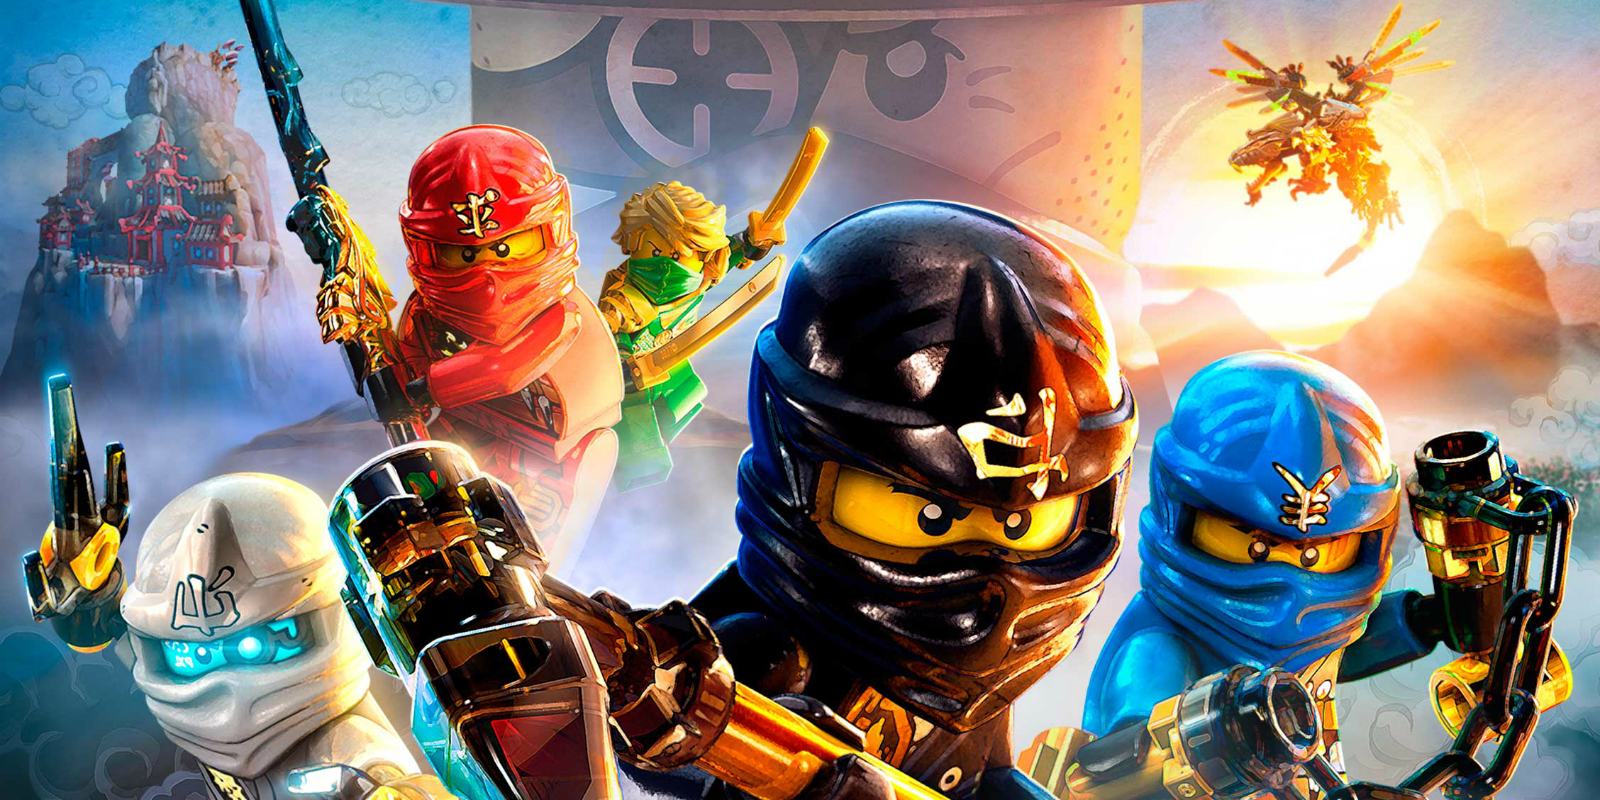 First Trailer For The LEGO Ninjago Movie Kicks Up Ninja Action | Digital Trends